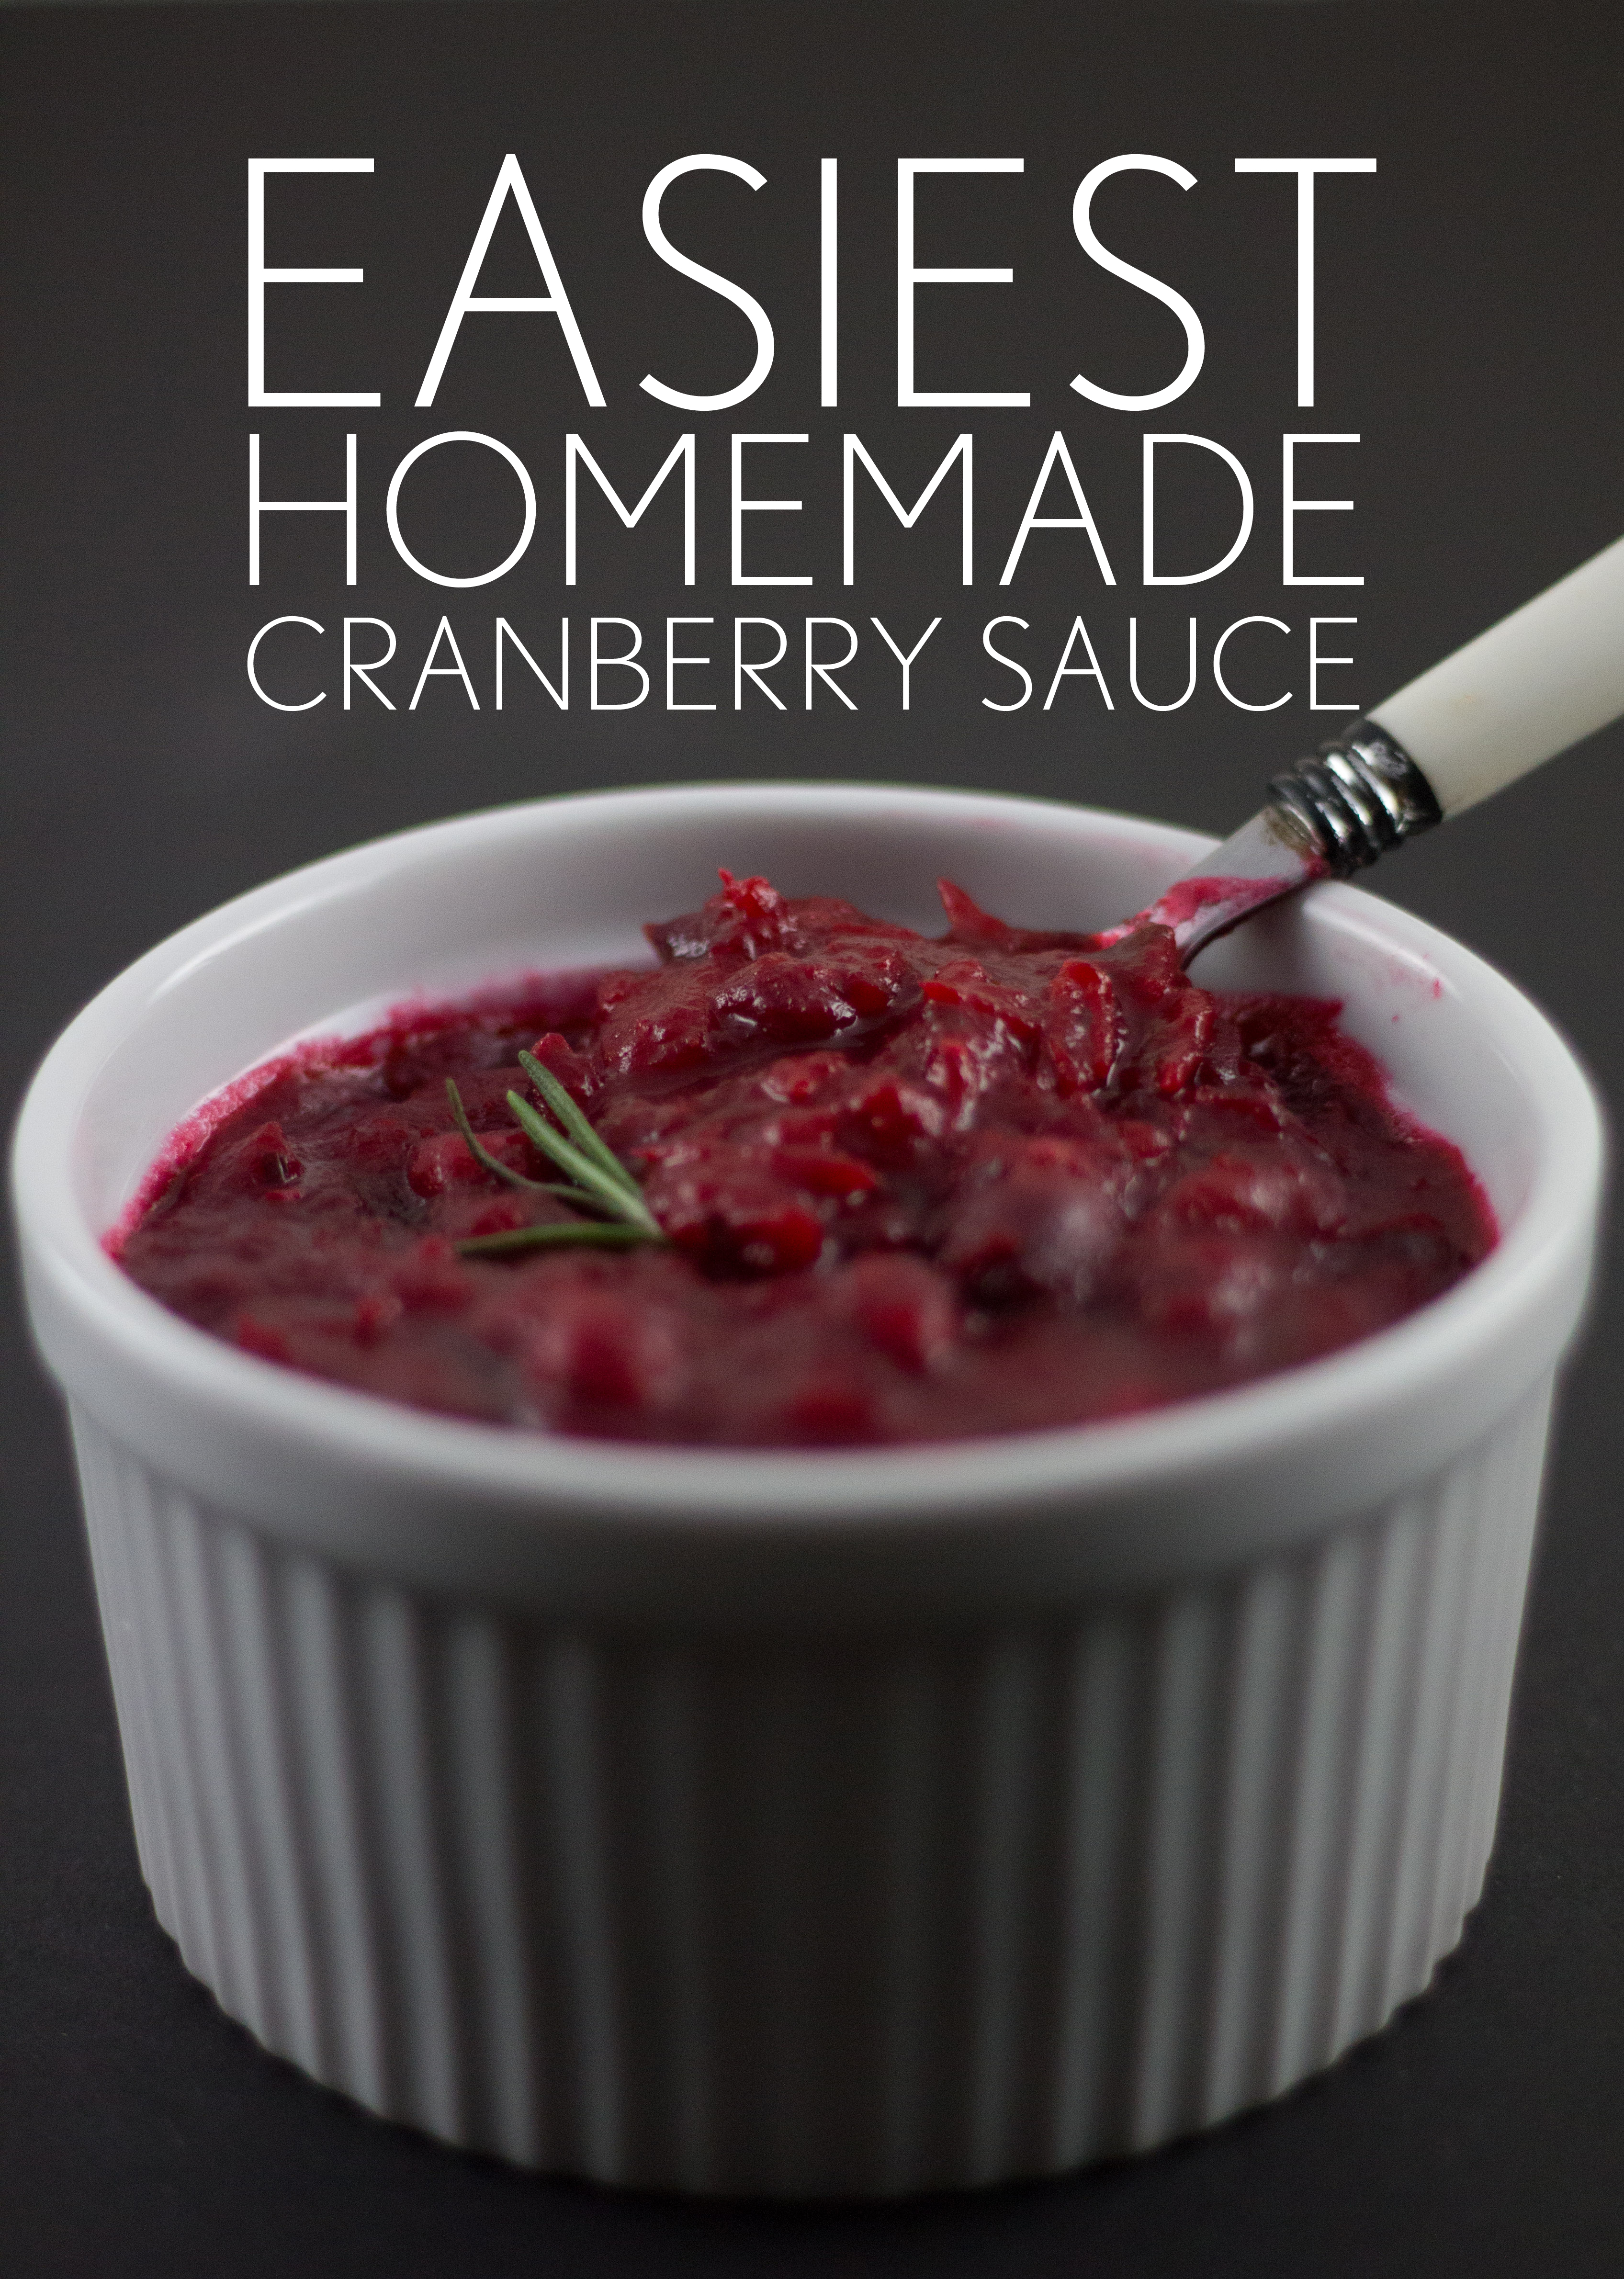 cranberry sauce text (1 of 2)